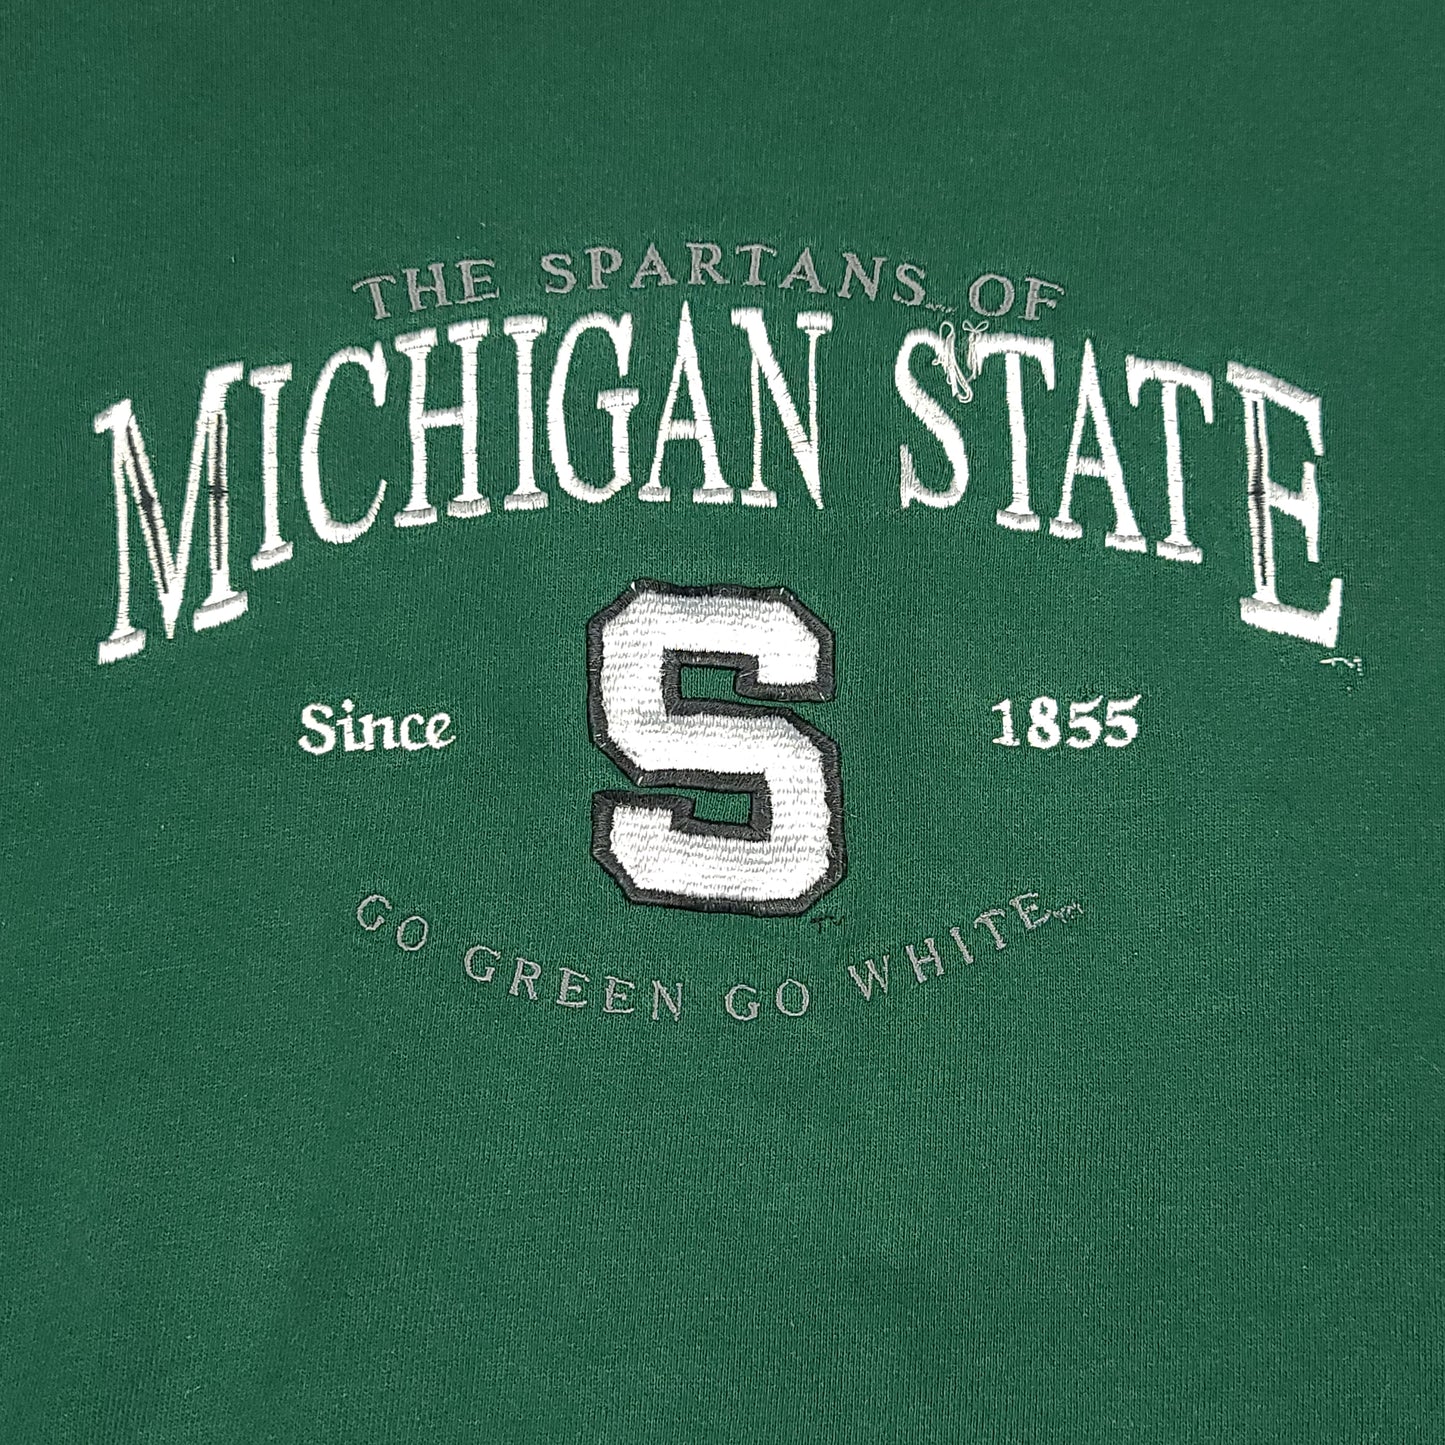 Vintage Michigan State University Green Sweatshirt